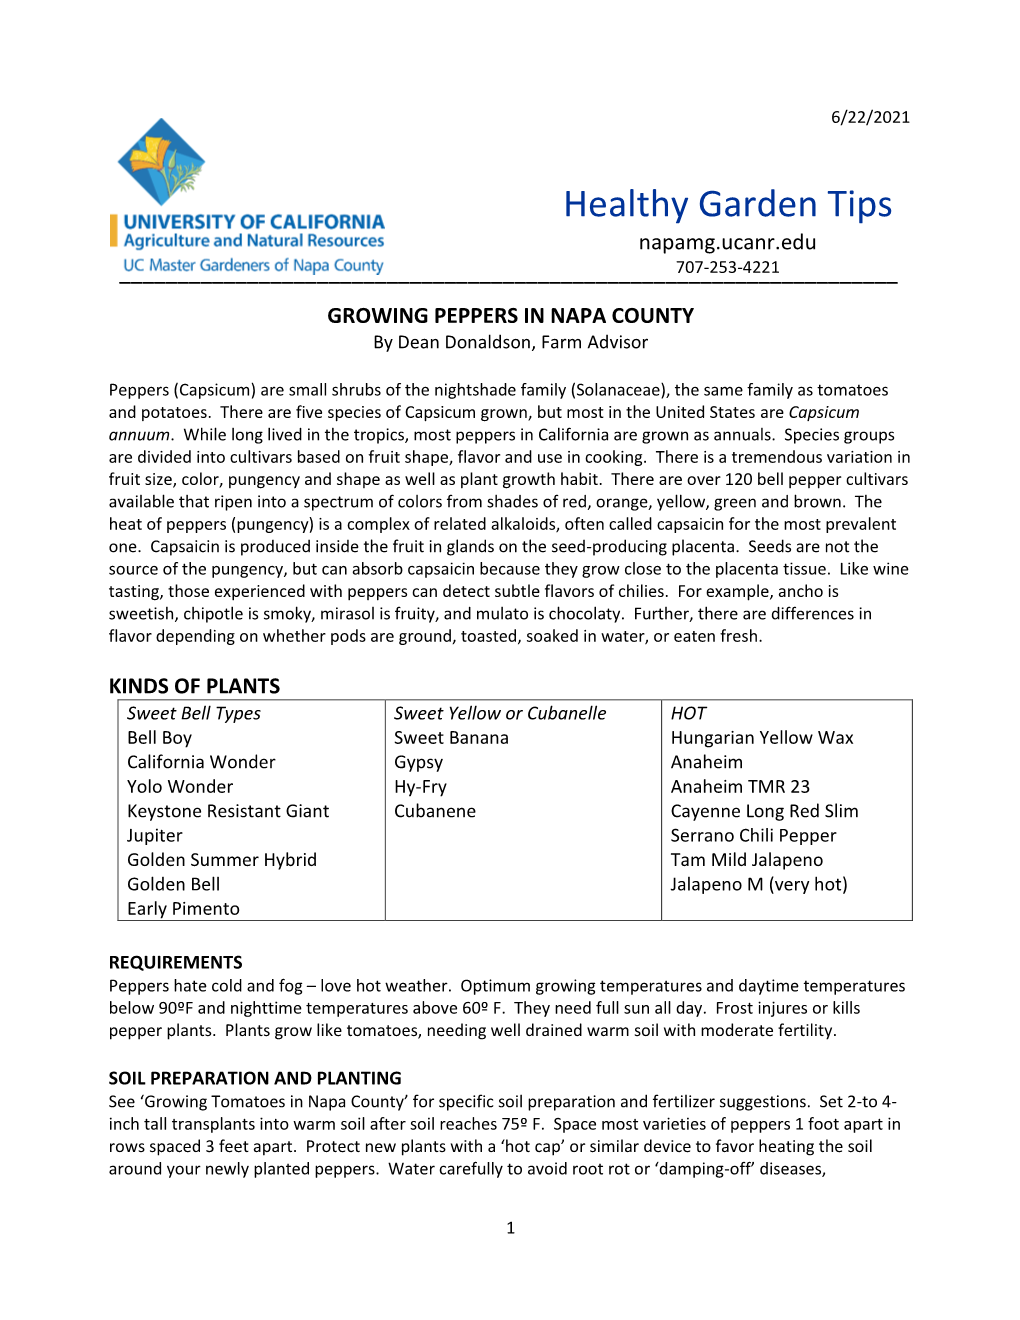 Healthy Garden Tips